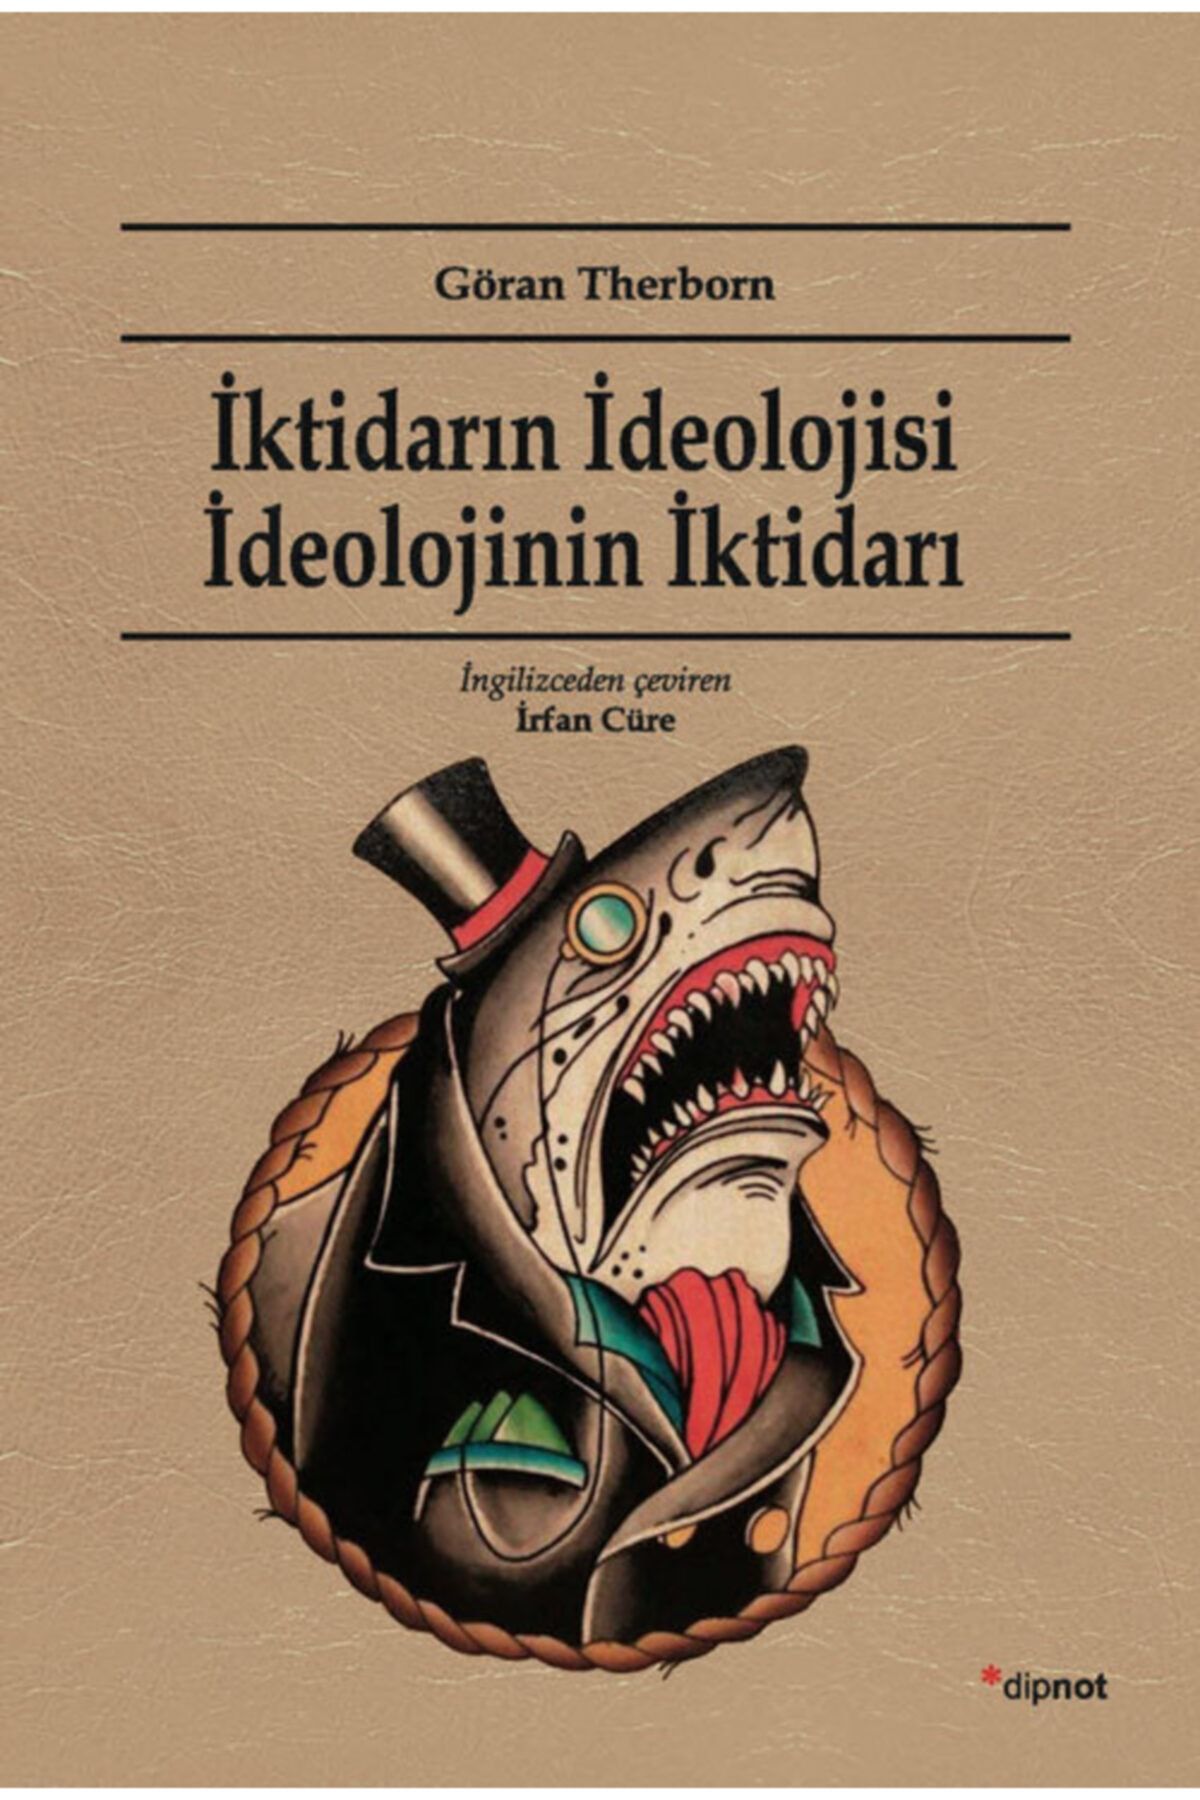 Dipnot Yayınları Iktidarın Ideolojisi Ideolojinin Iktidarı Göran Therborn Çeviri: Irfan Cüre